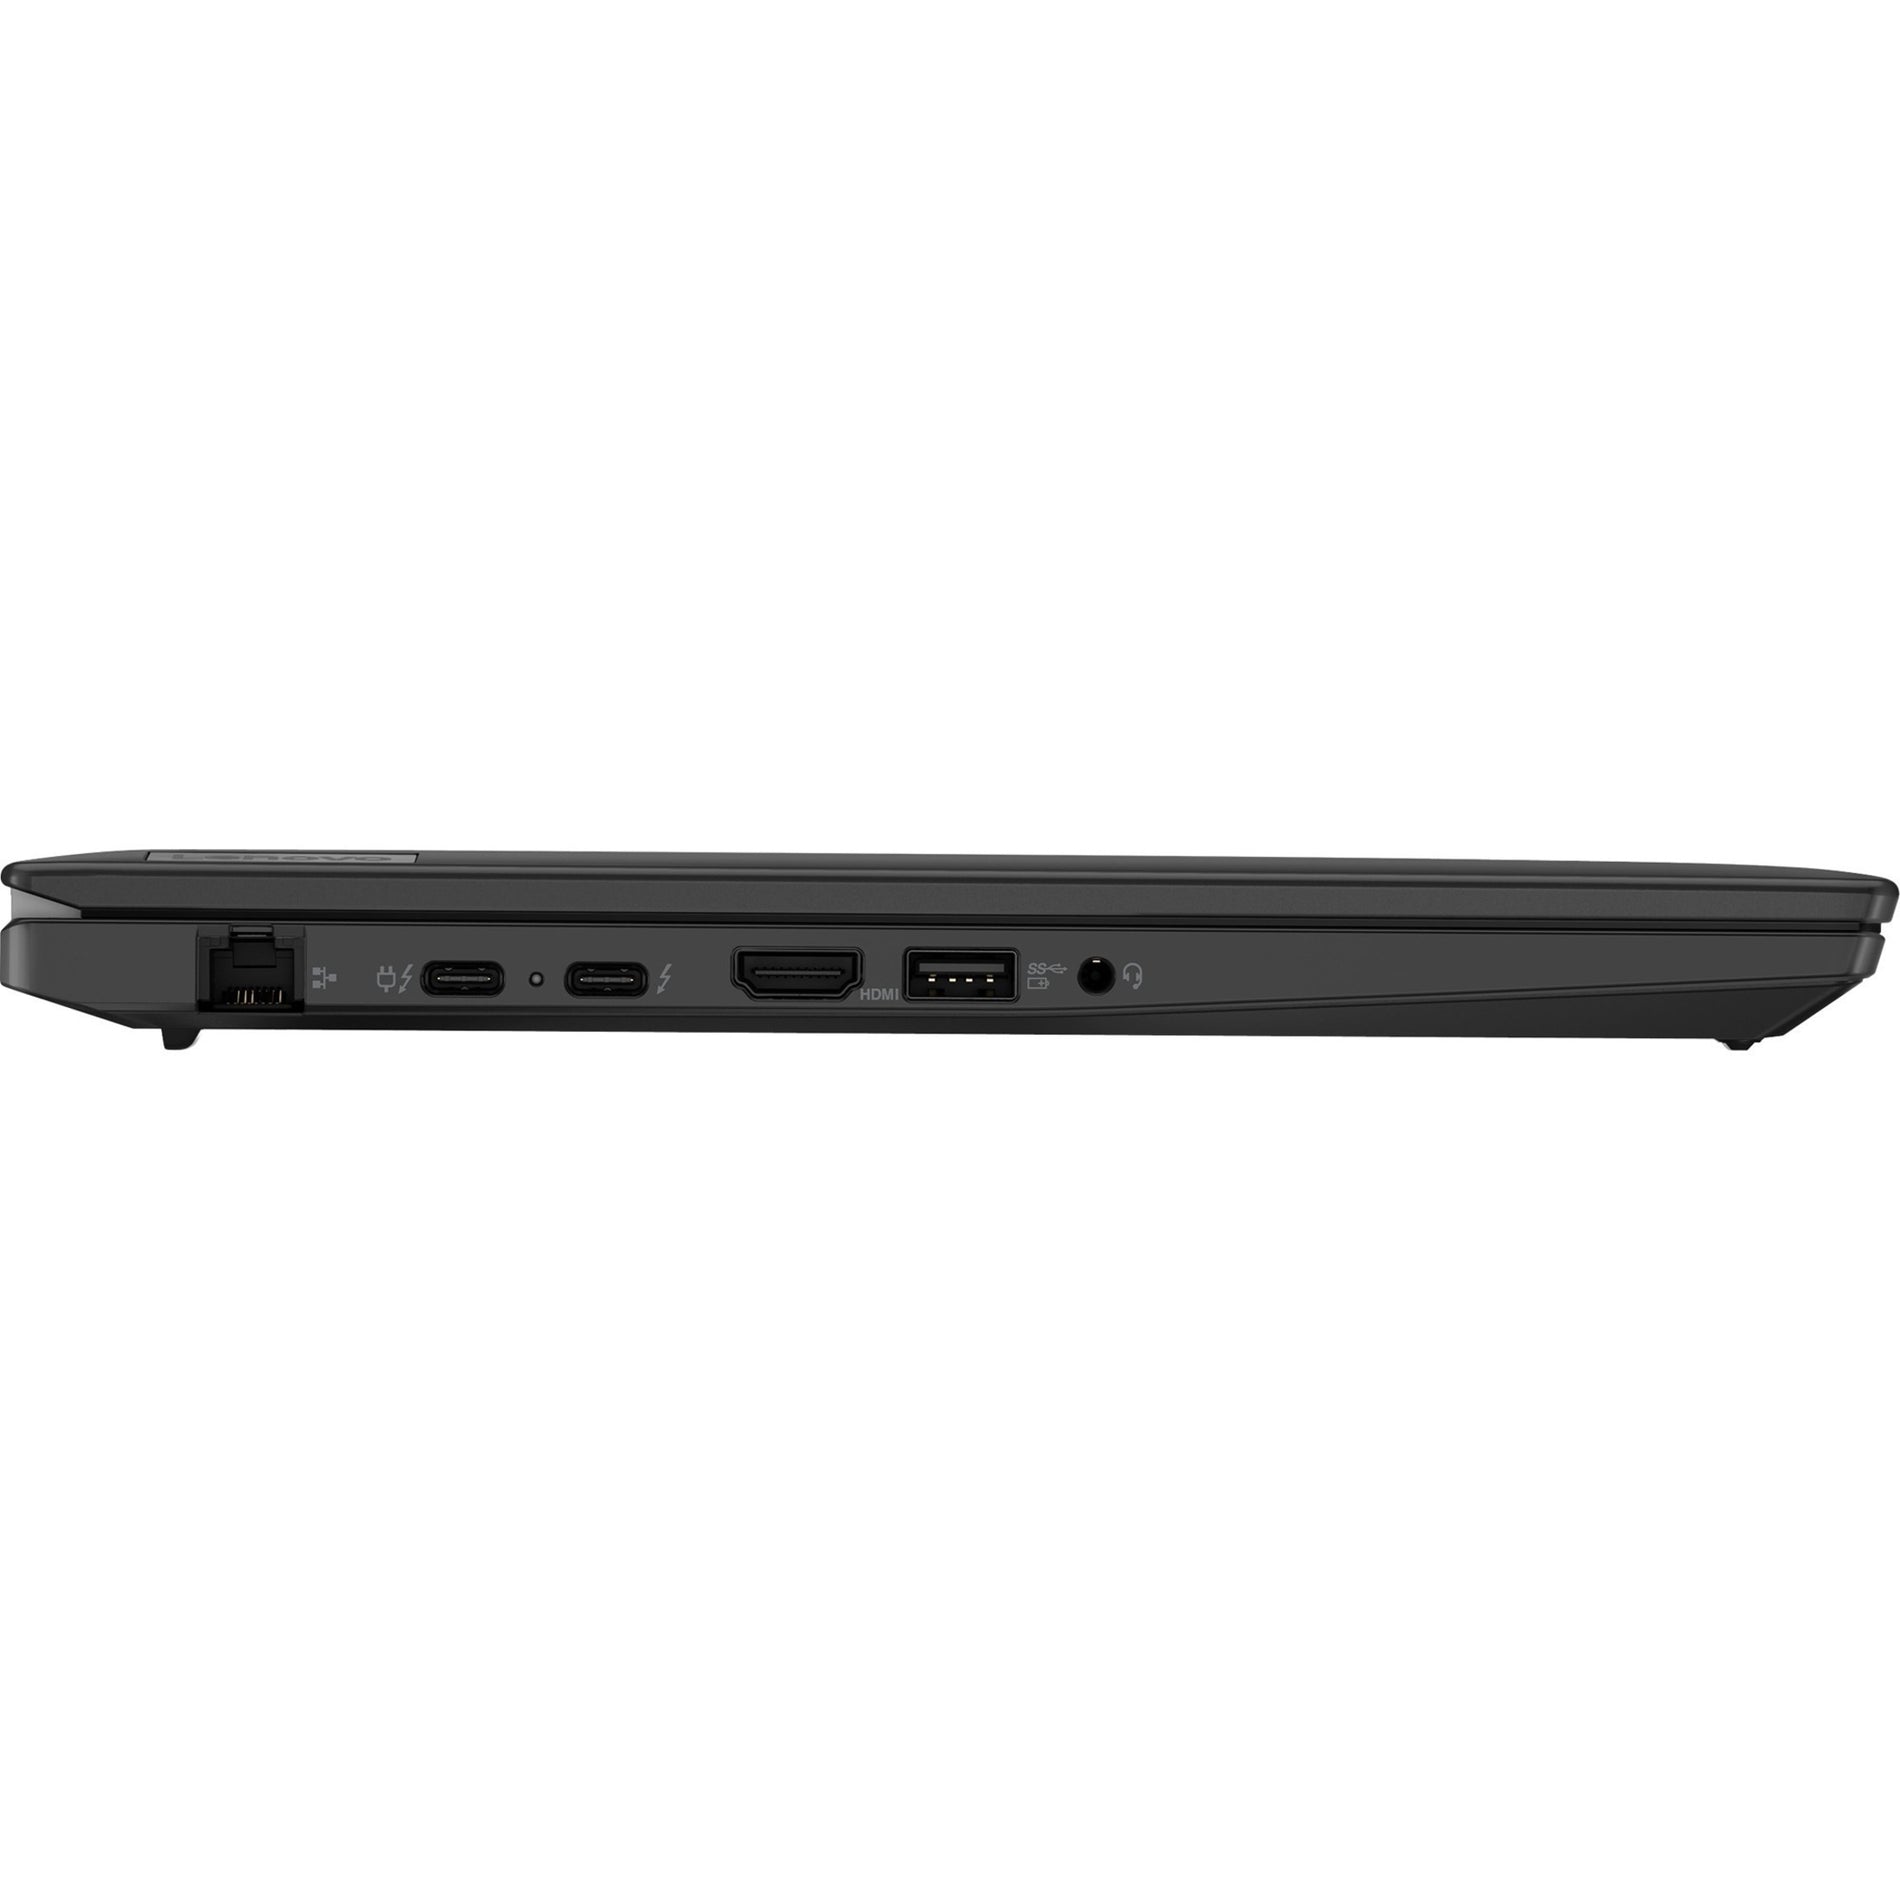 Lenovo ThinkPad P14s Gen 3 Mobile Workstation - Intel Core i7, 16GB RAM, 512GB SSD, Windows 11 [Discontinued]